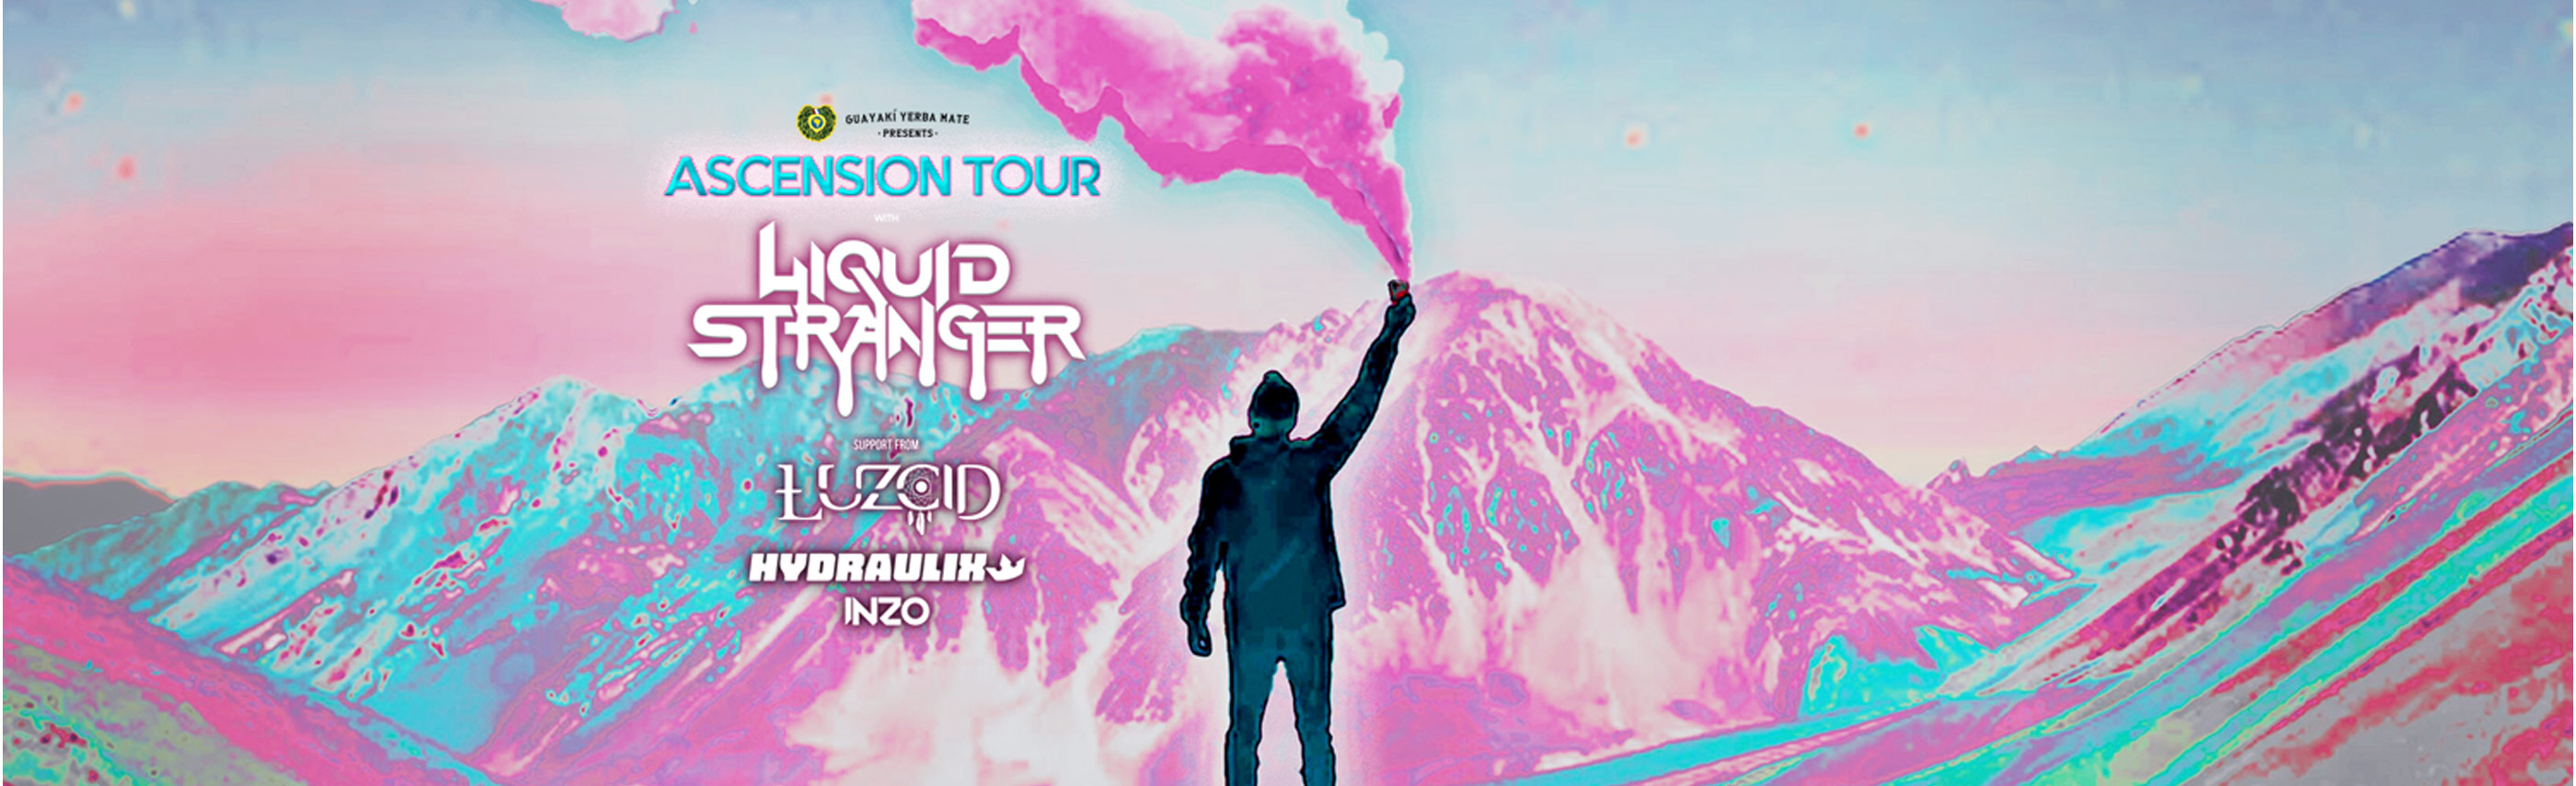 Liquid Stranger Announces Ascension Tour Including Two Montana Shows